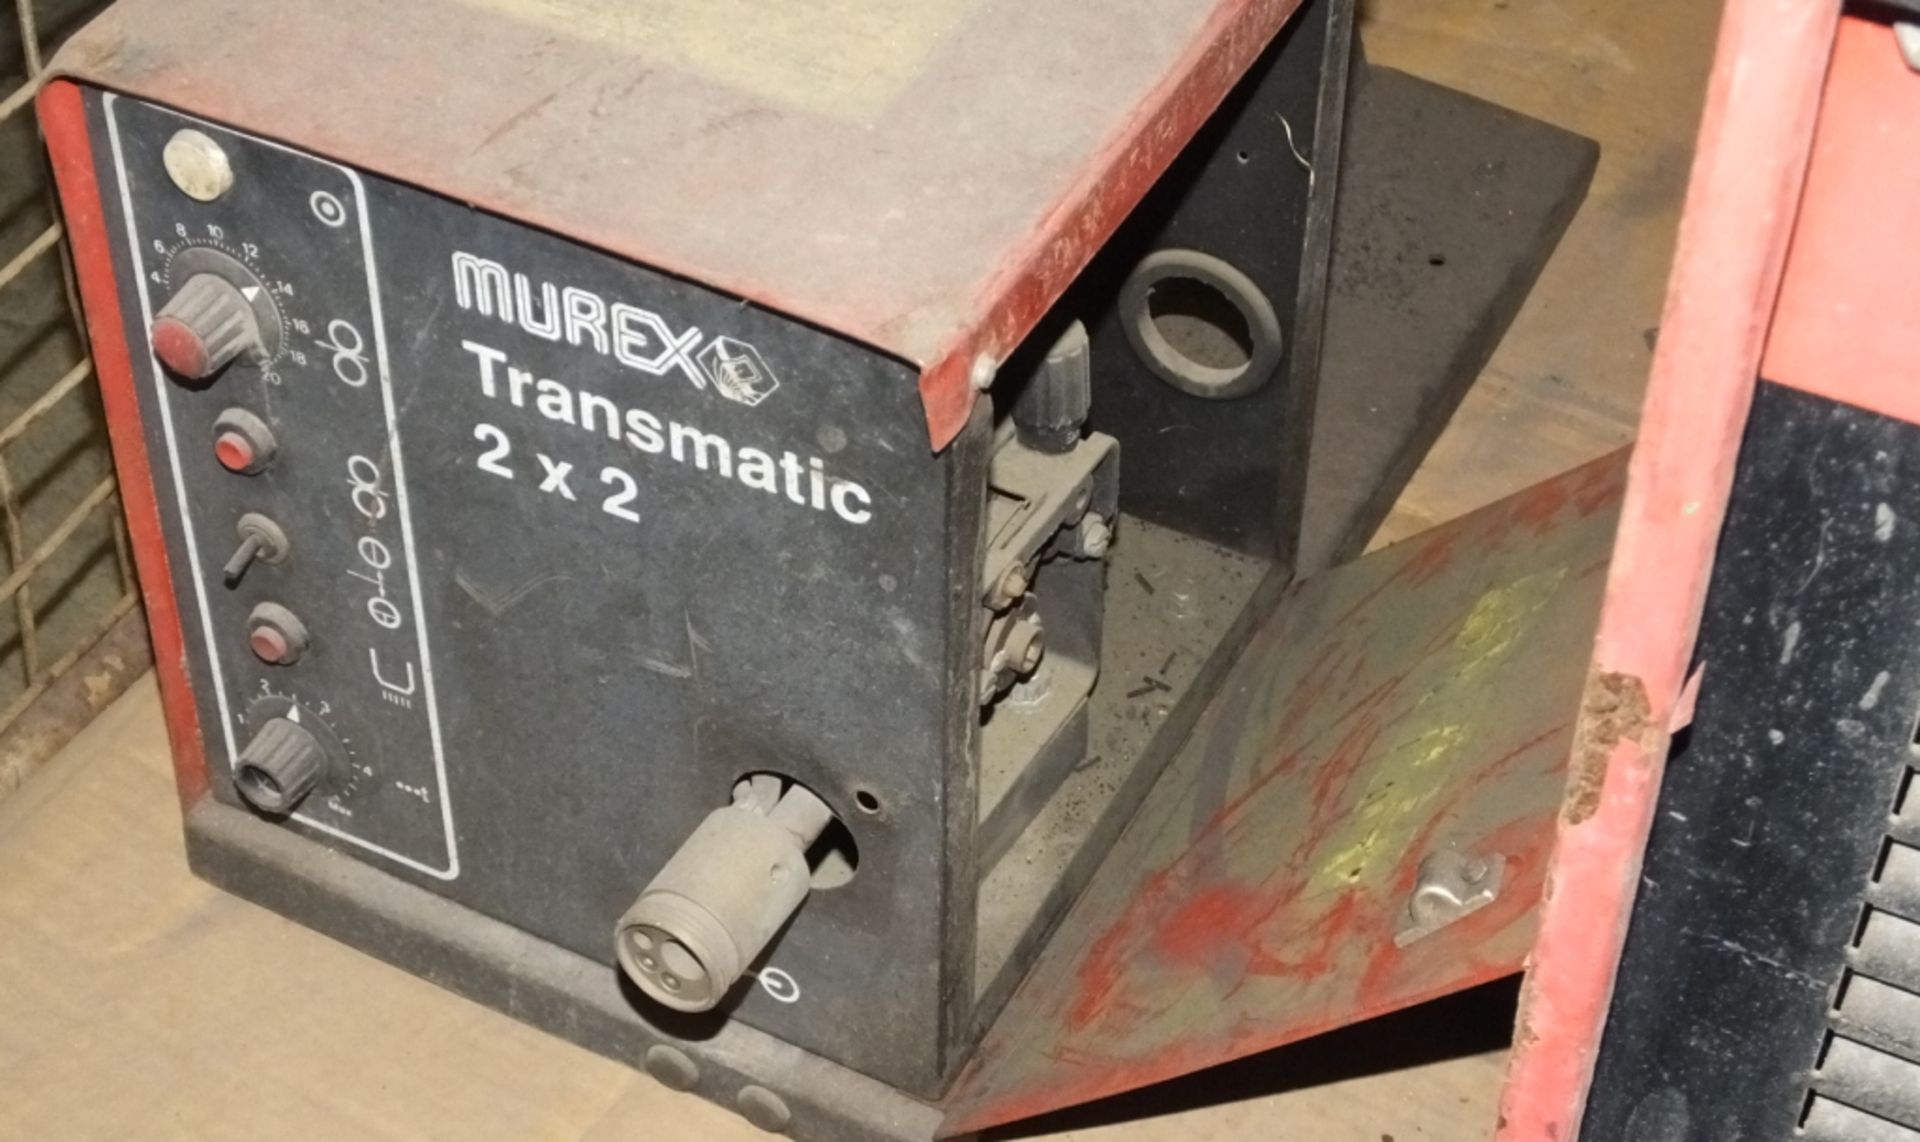 Murex Transmig 305 welder, Transmatic 2x2 wire feed - Image 3 of 3